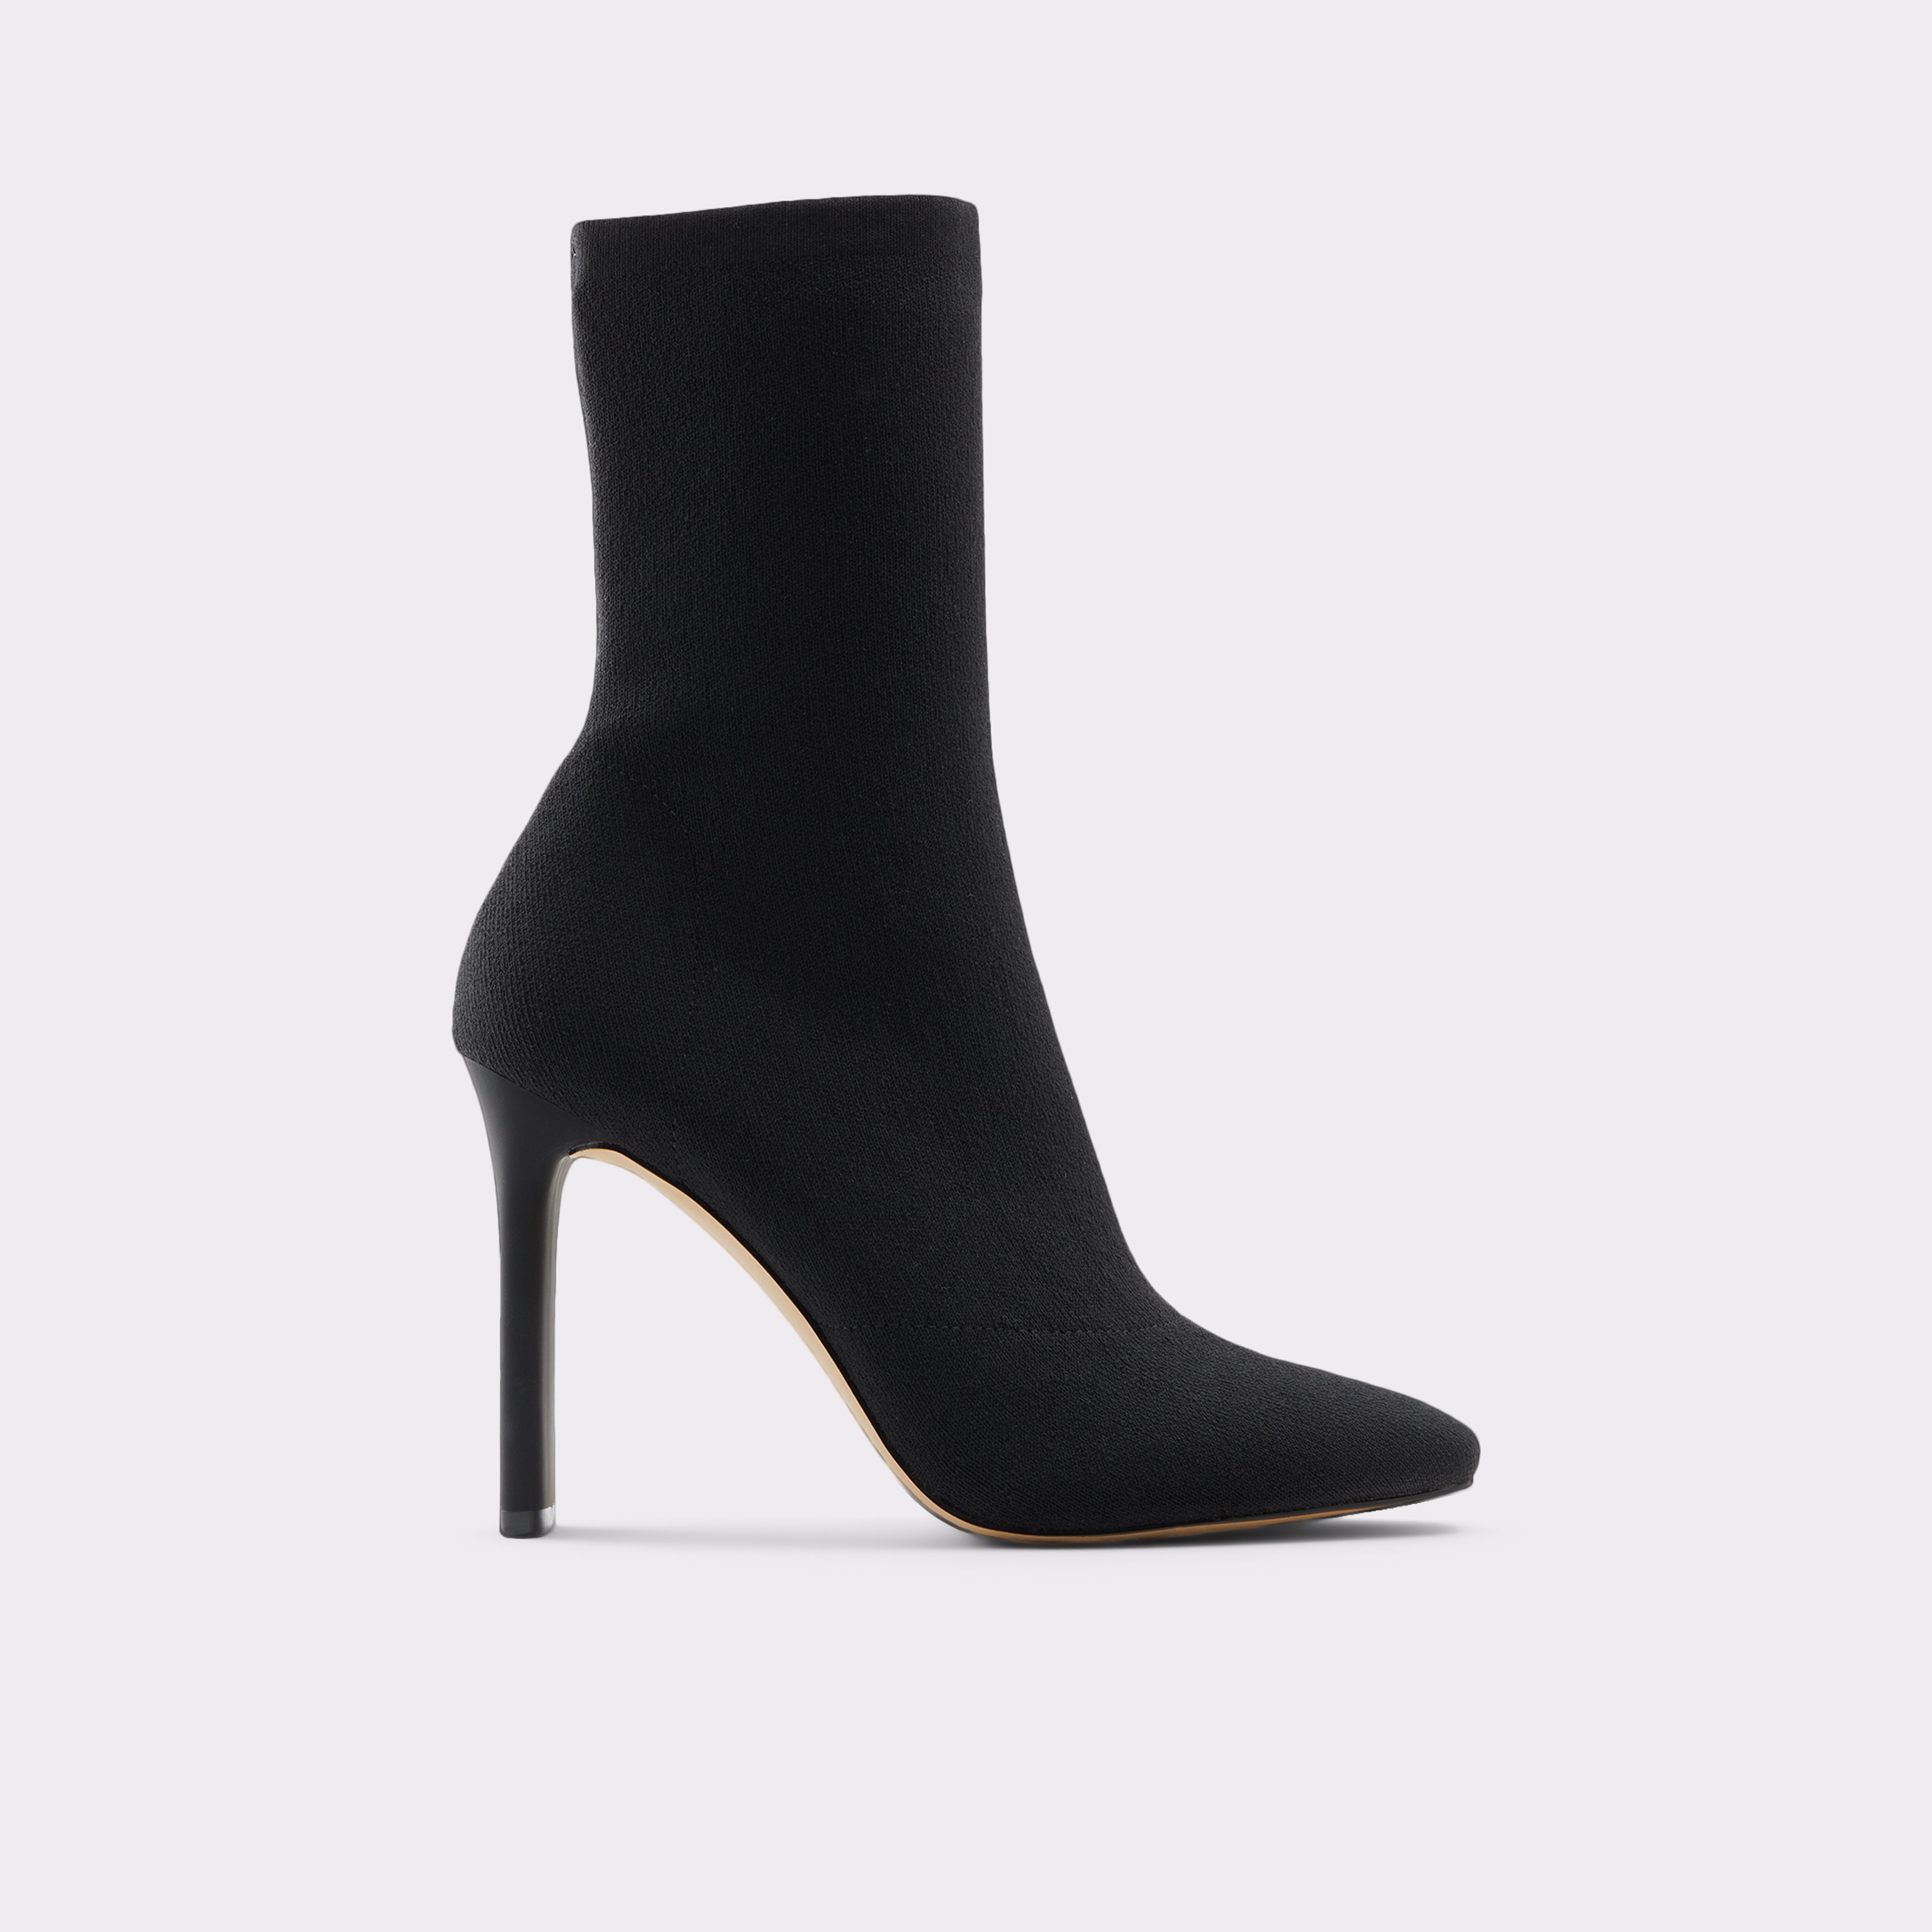 Delylah Black Textile Knit Women's Dress heeled boots | ALDO Canada